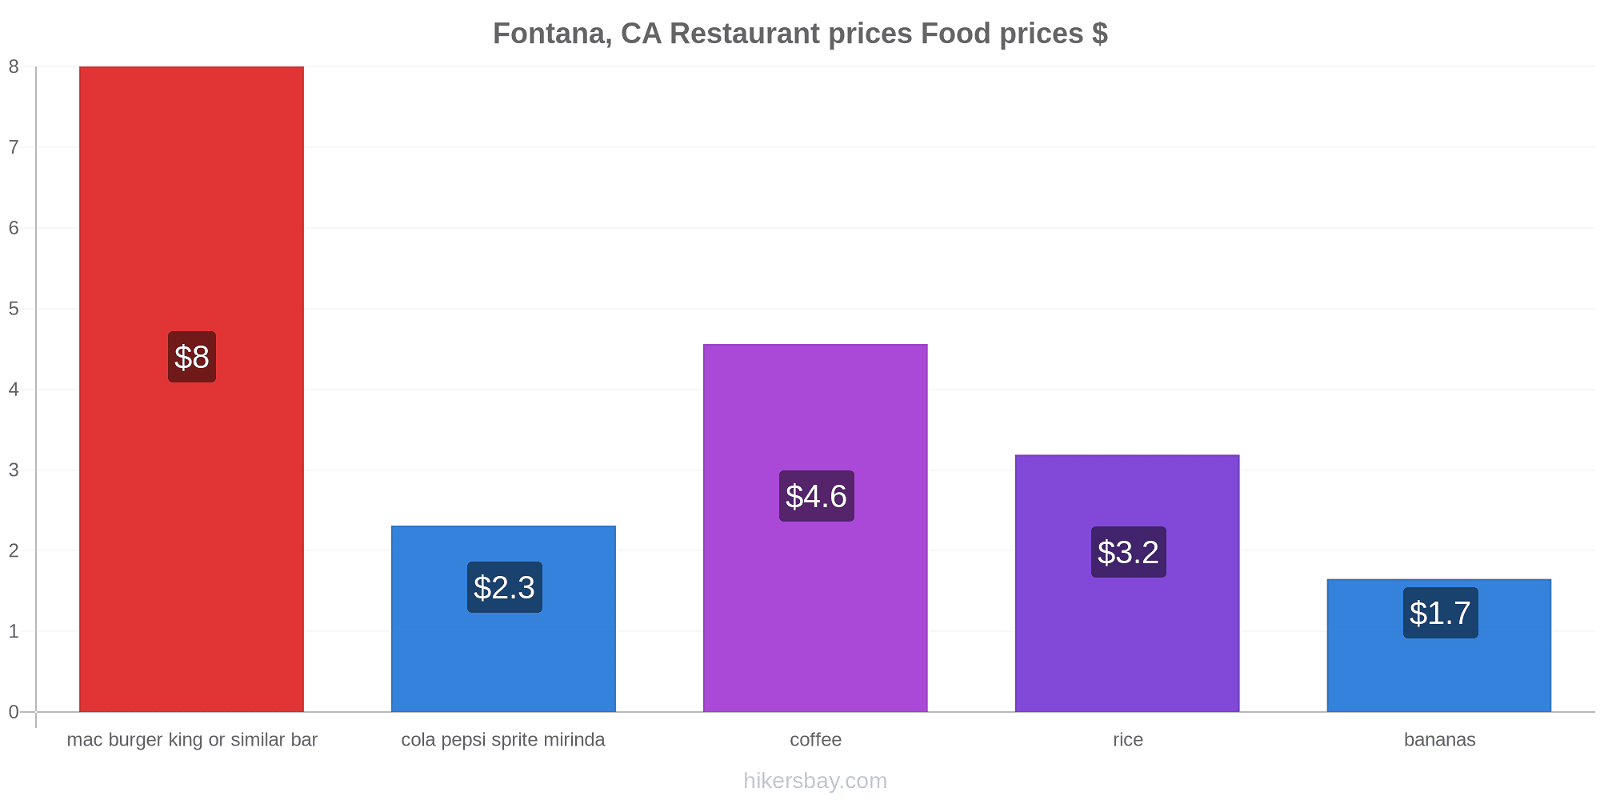 Fontana, CA price changes hikersbay.com